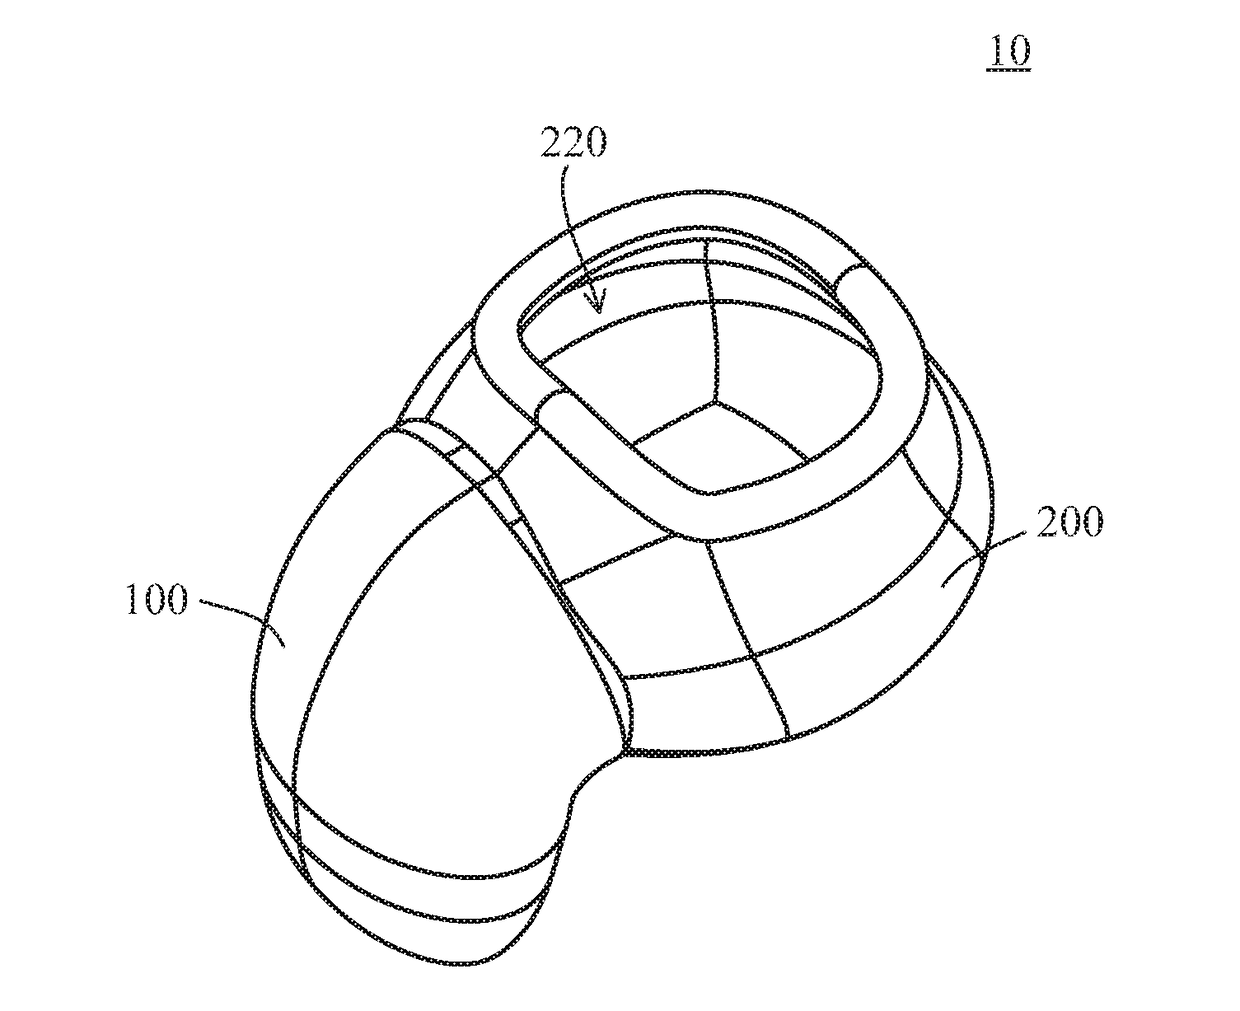 Earplug structure and earphone device